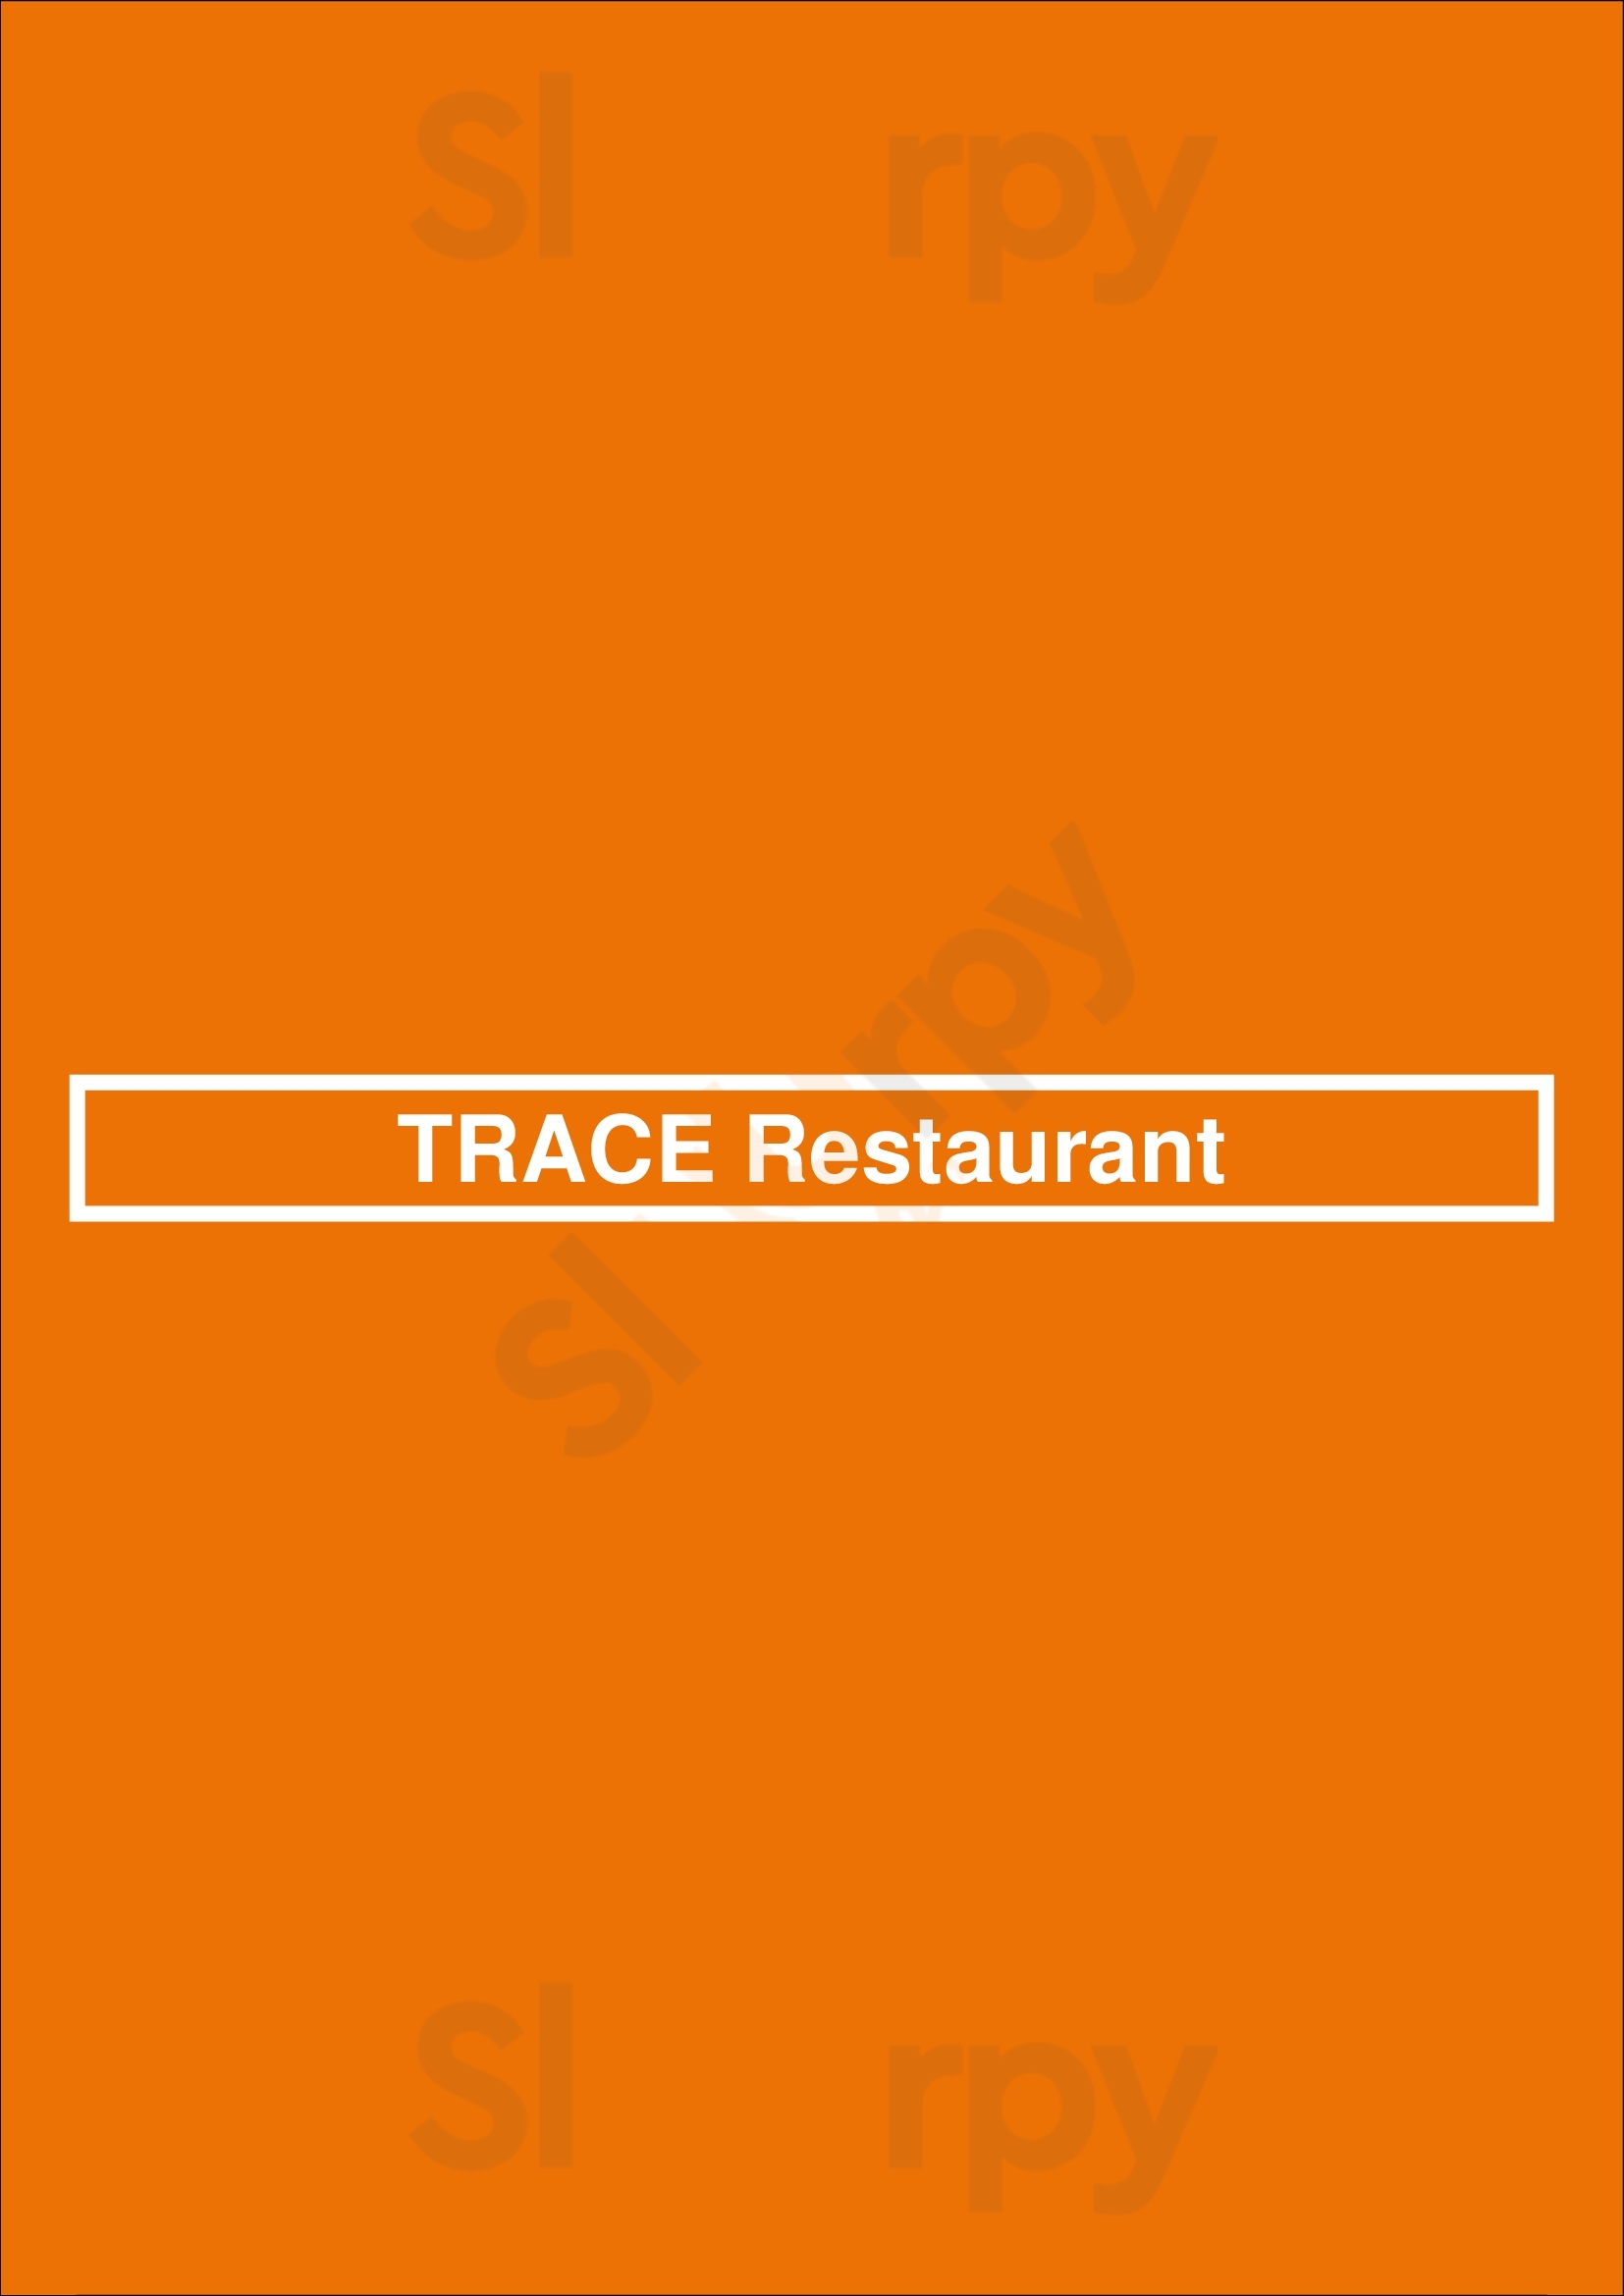 Trace Restaurant Austin Menu - 1